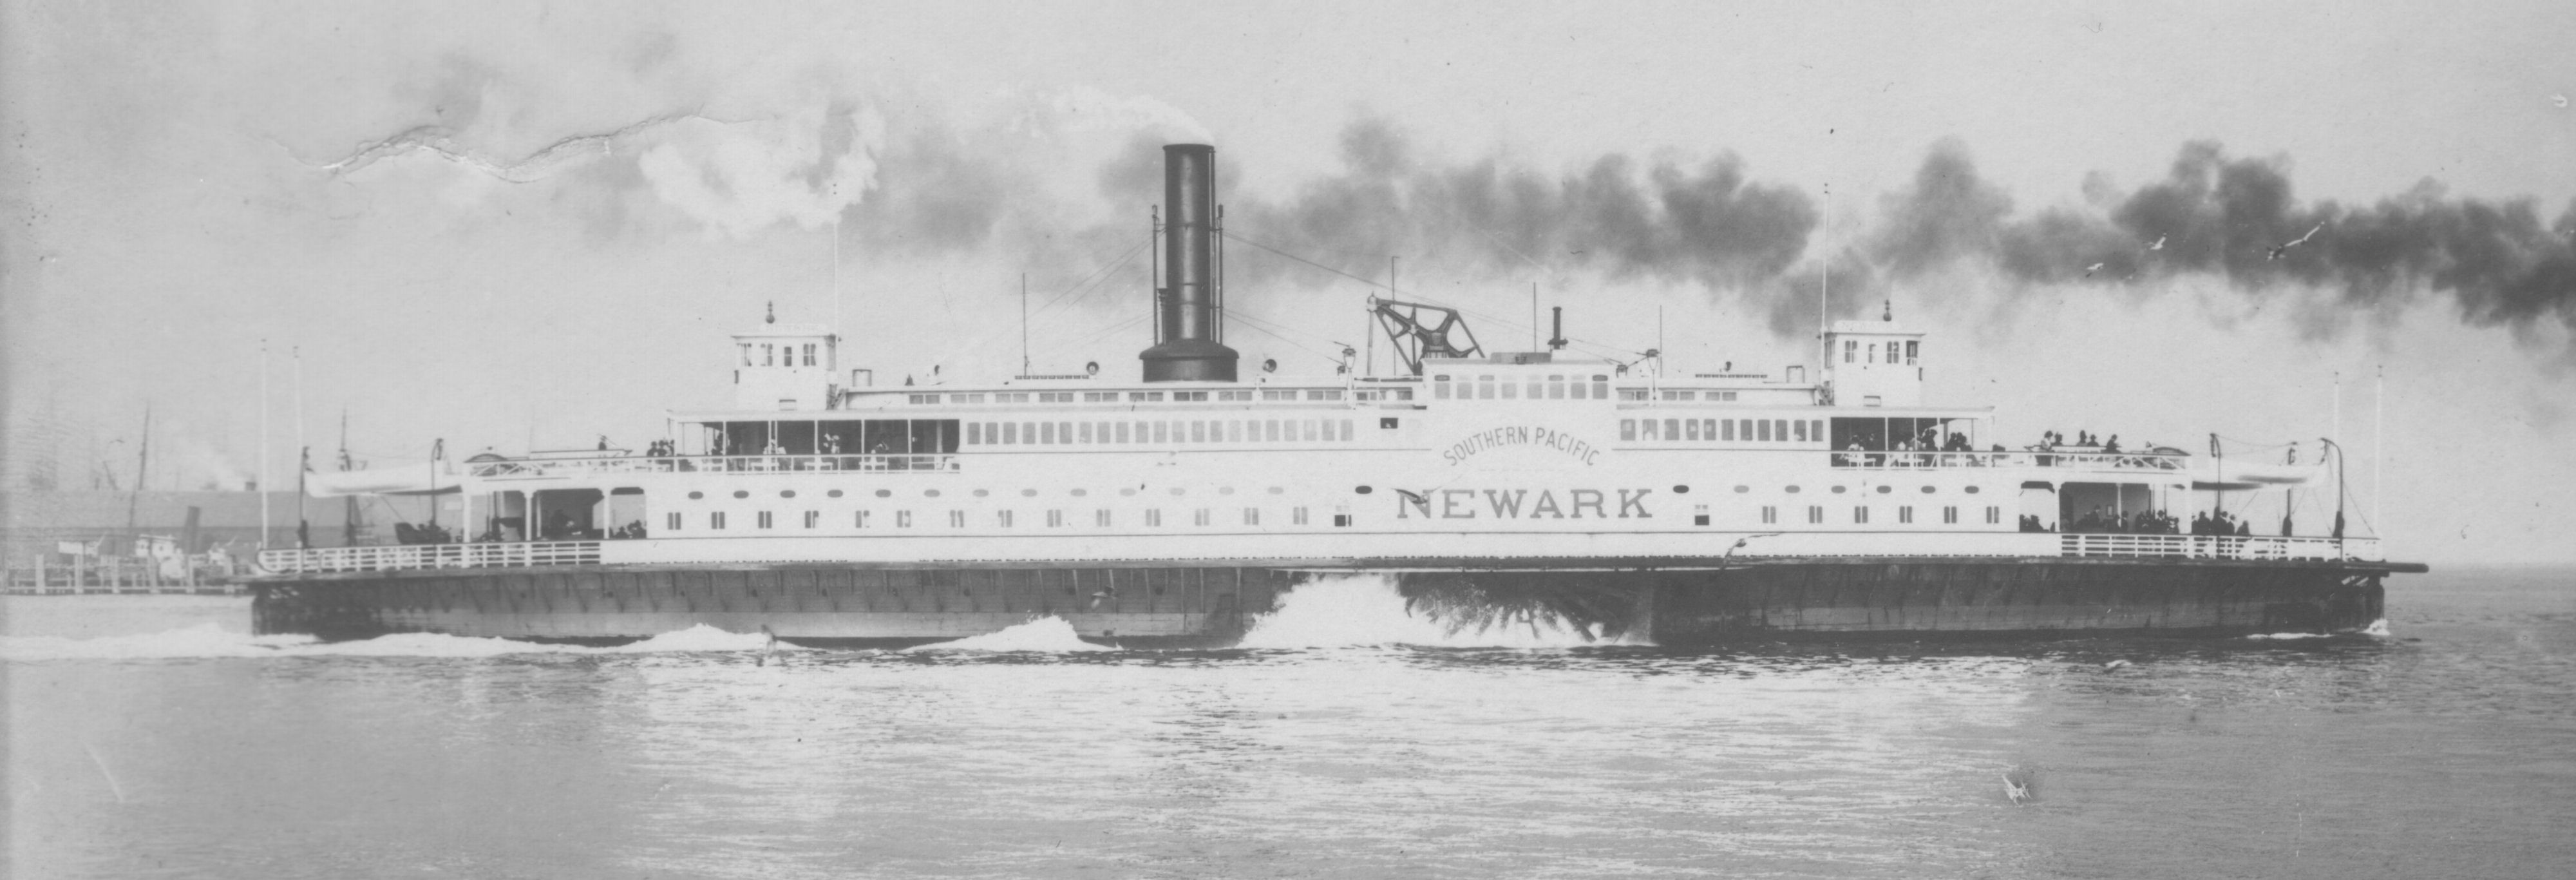 Ferryboat Newark circa 1910